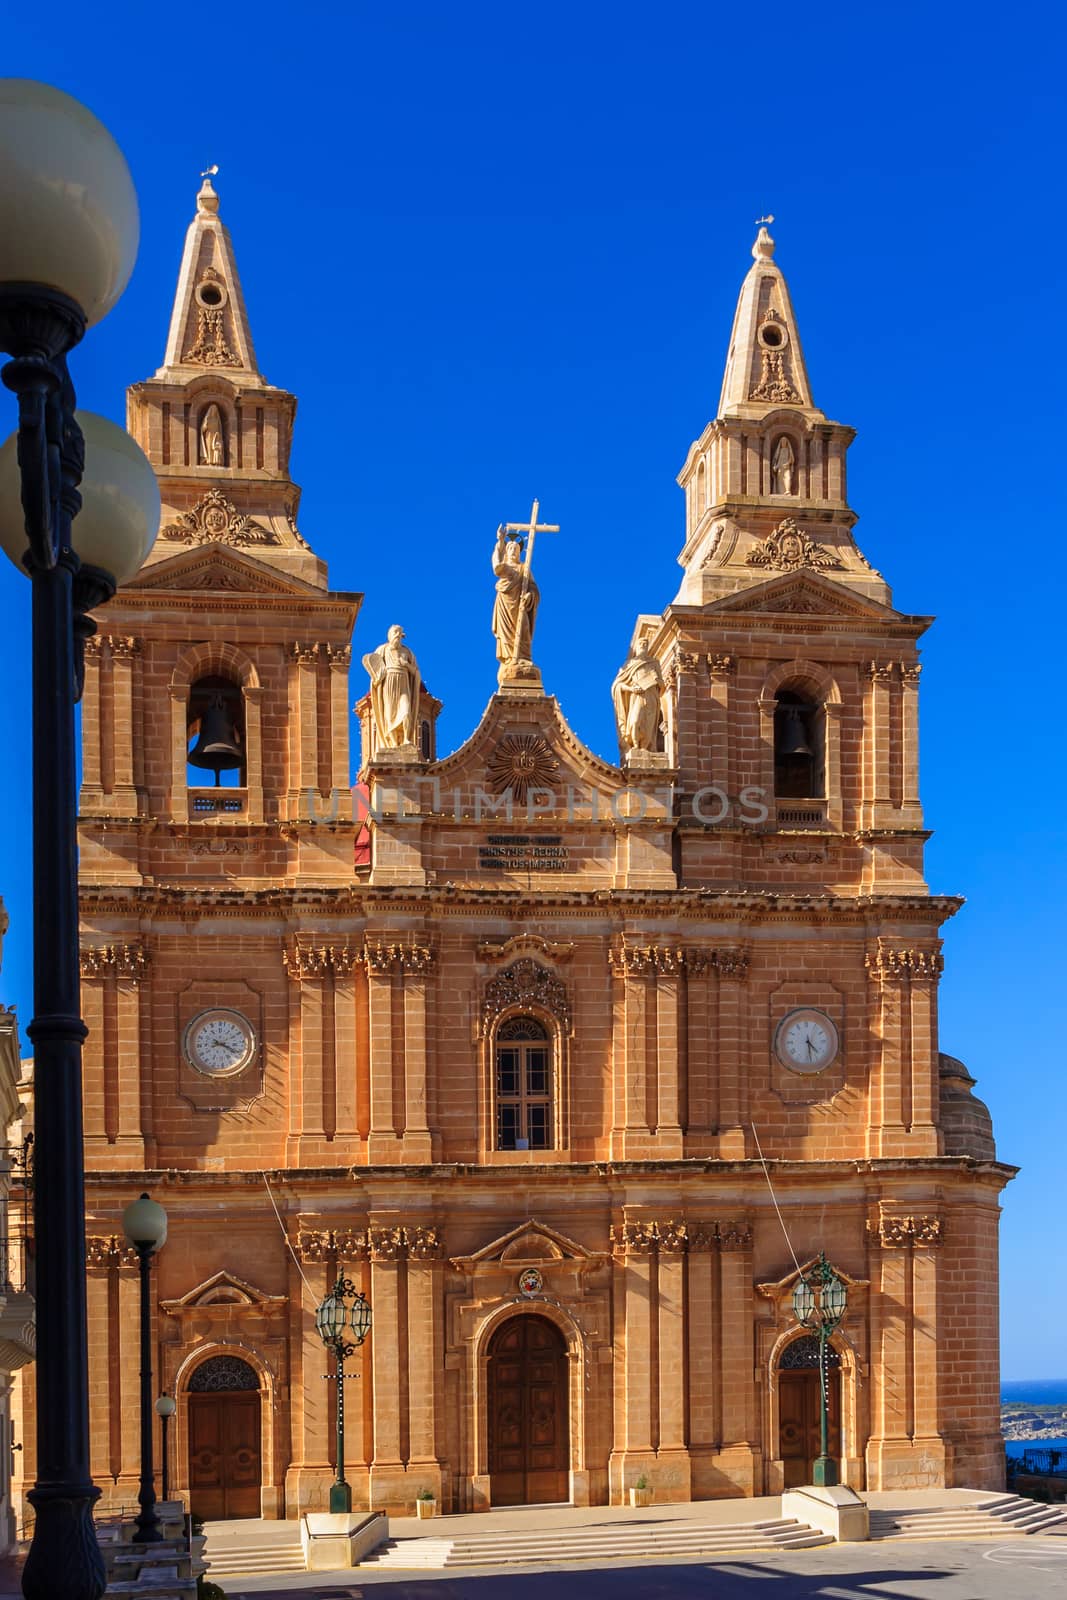 View of the facade of the Parish Church of Melliha, Malta